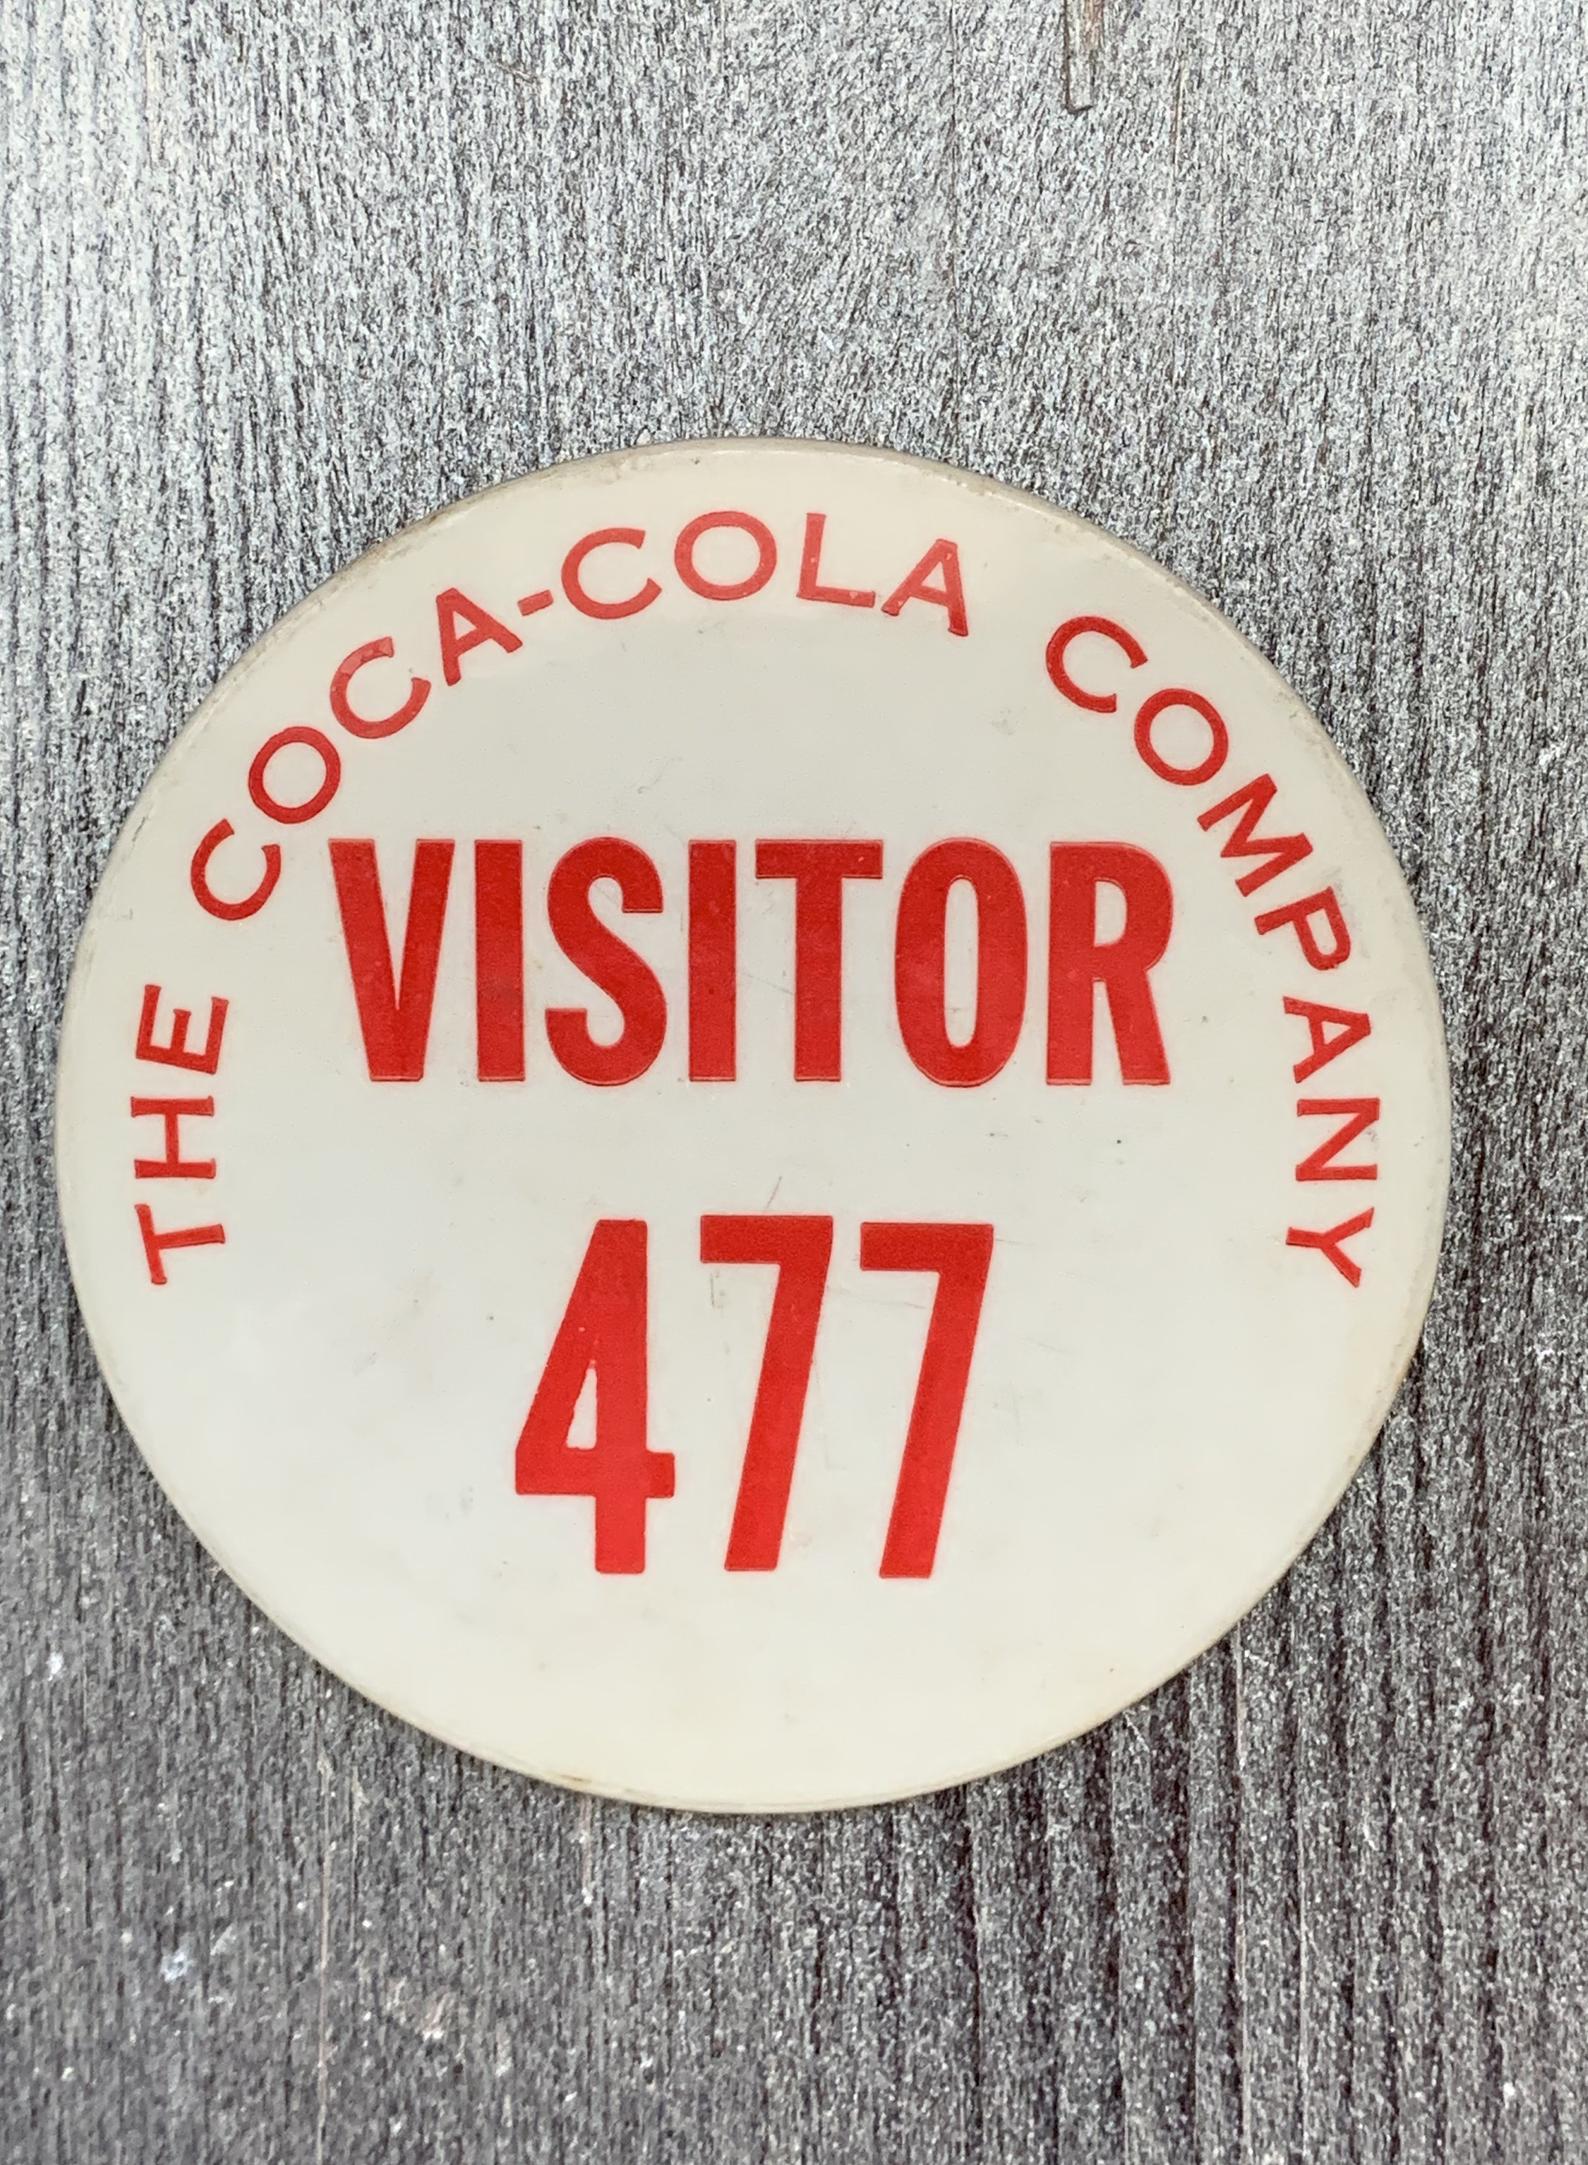 The "Coca-Cola Company Visitor 477" Vintage Pinback Button